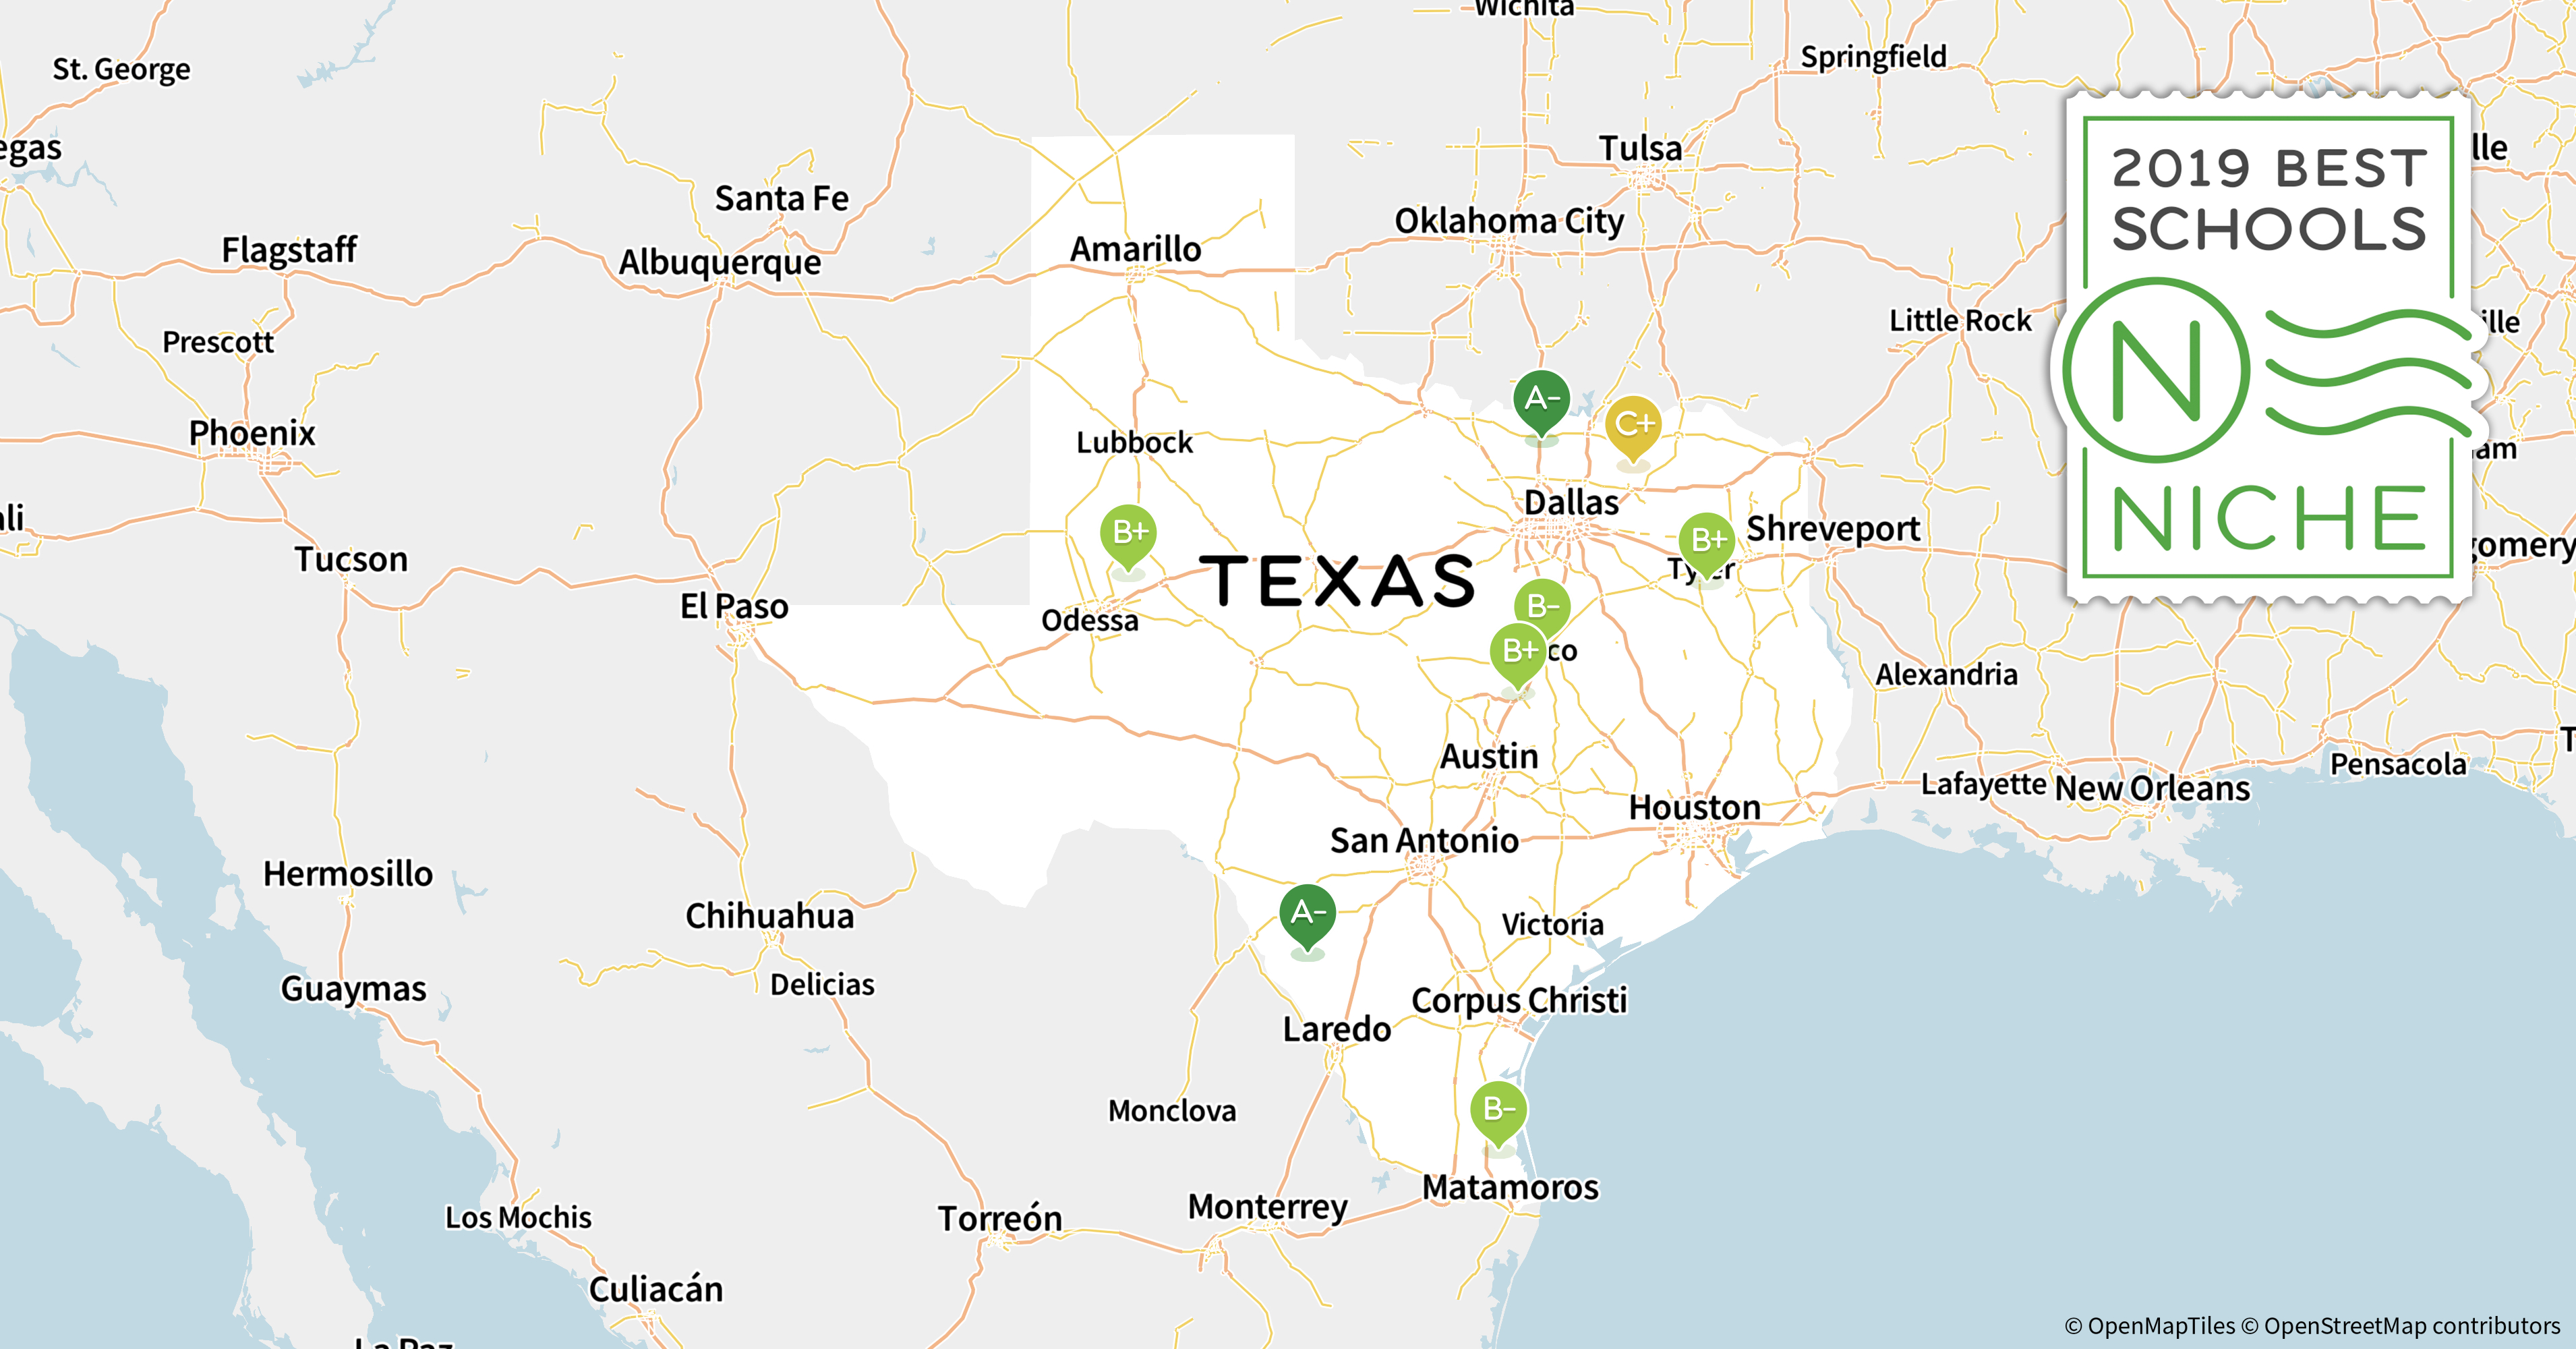 2019 Best School Districts In Texas - Niche - Texas School District Map By Region